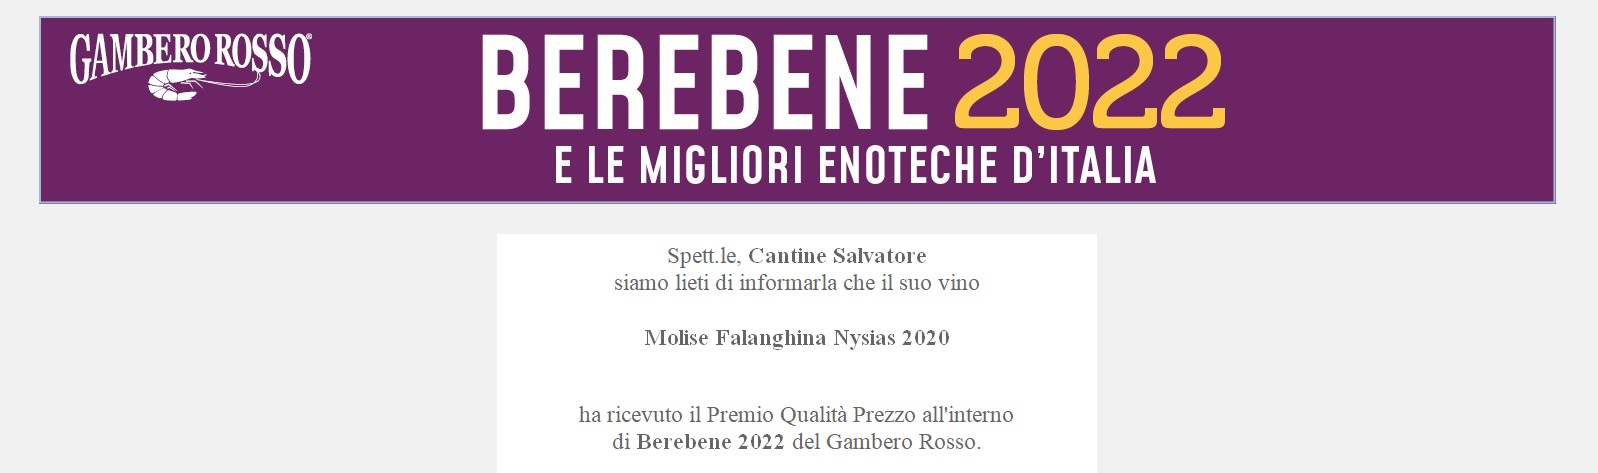 Premio Qualit prezzo Berebene 2022 NYSIAS 2020